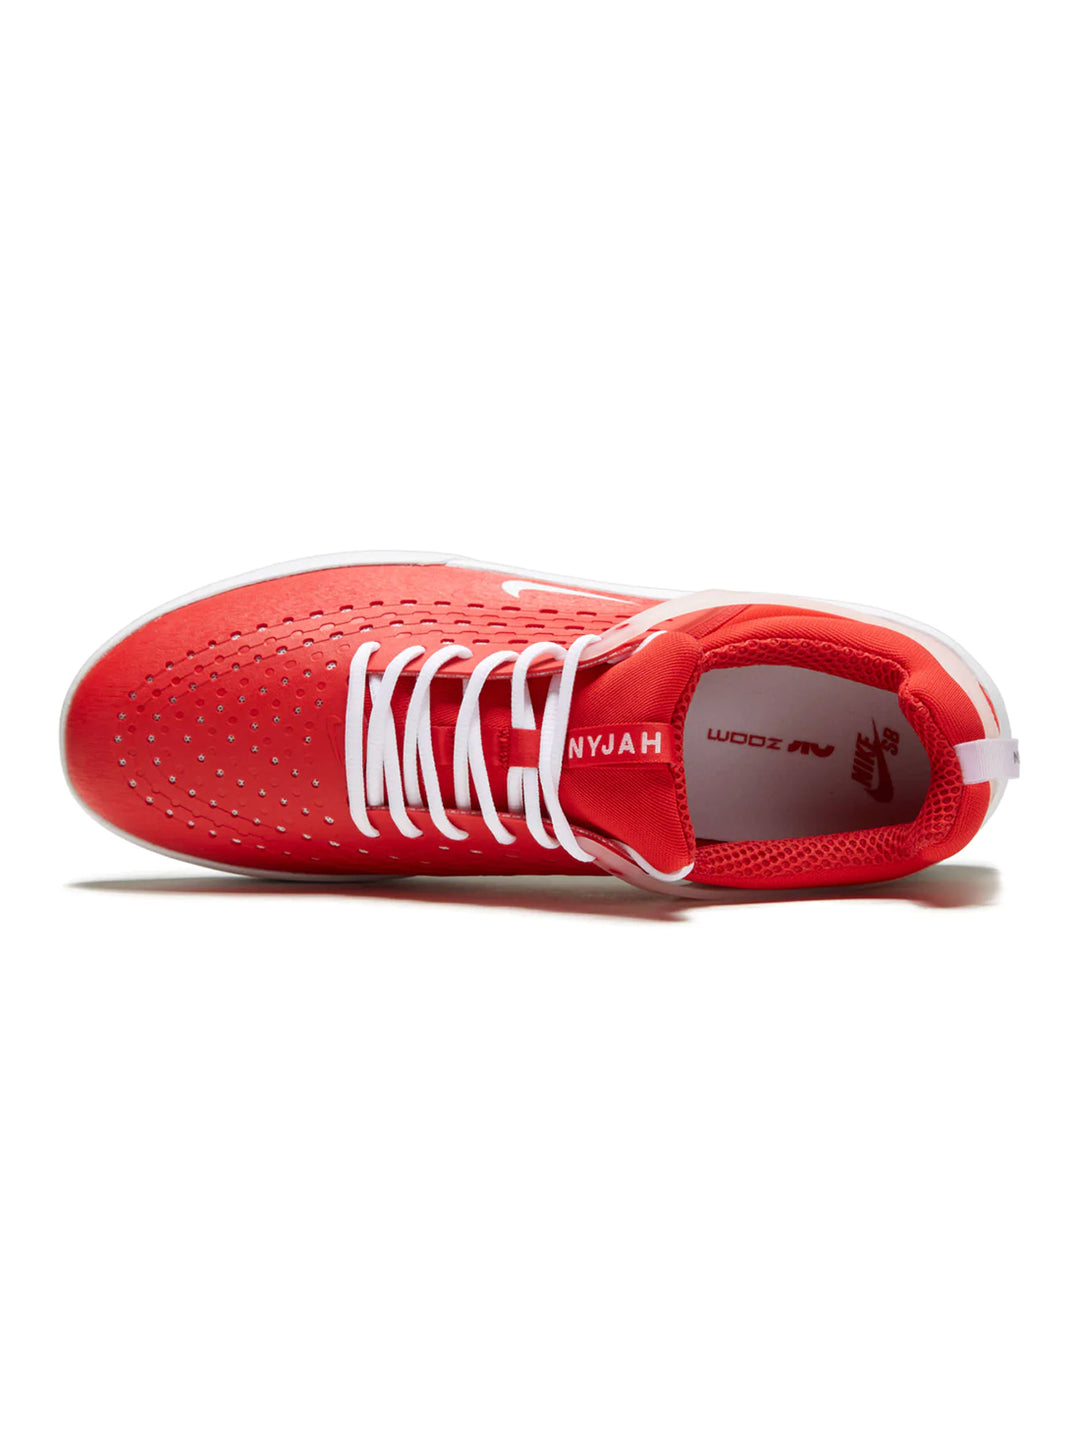 Nike SB Zoom Nyjah 3 - University Red / White